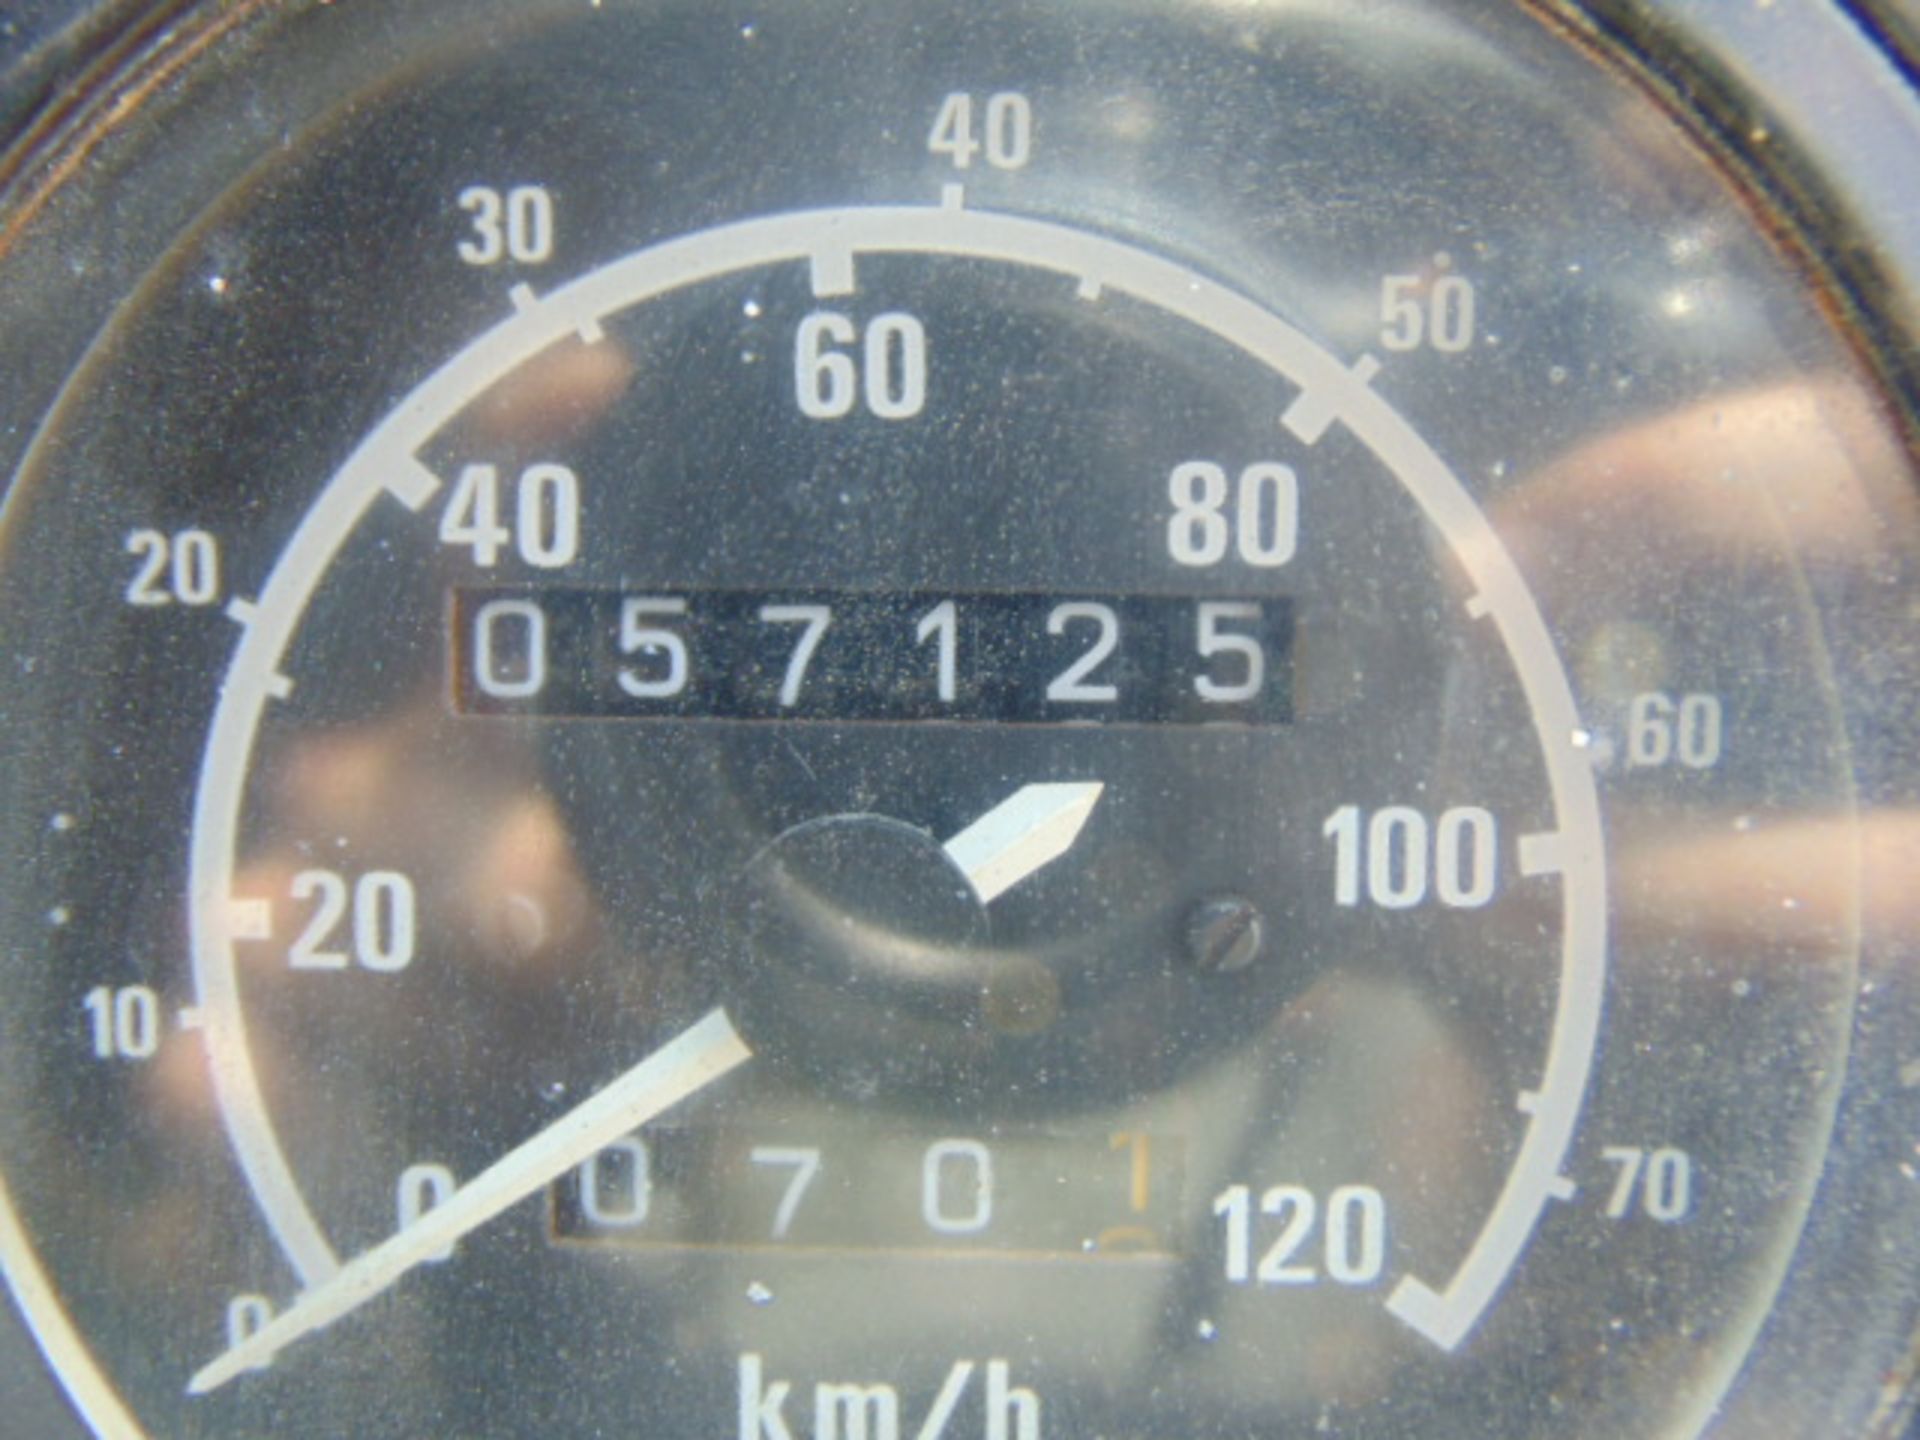 Leyland Daf 45/150 4 x 4 - Image 12 of 12